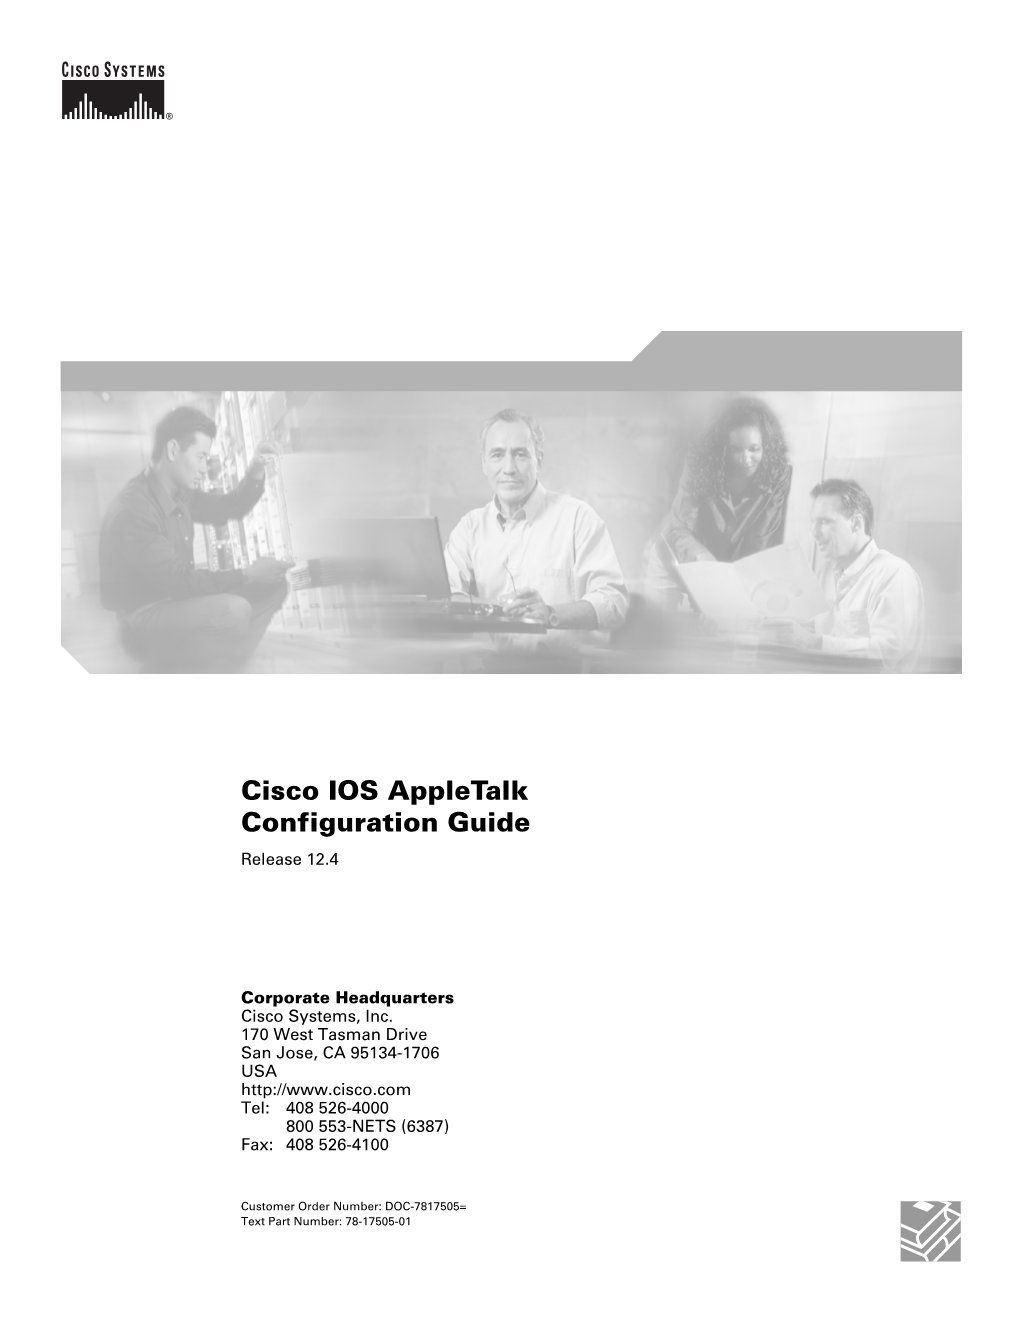 Cisco IOS Appletalk Configuration Guide Release 12.4